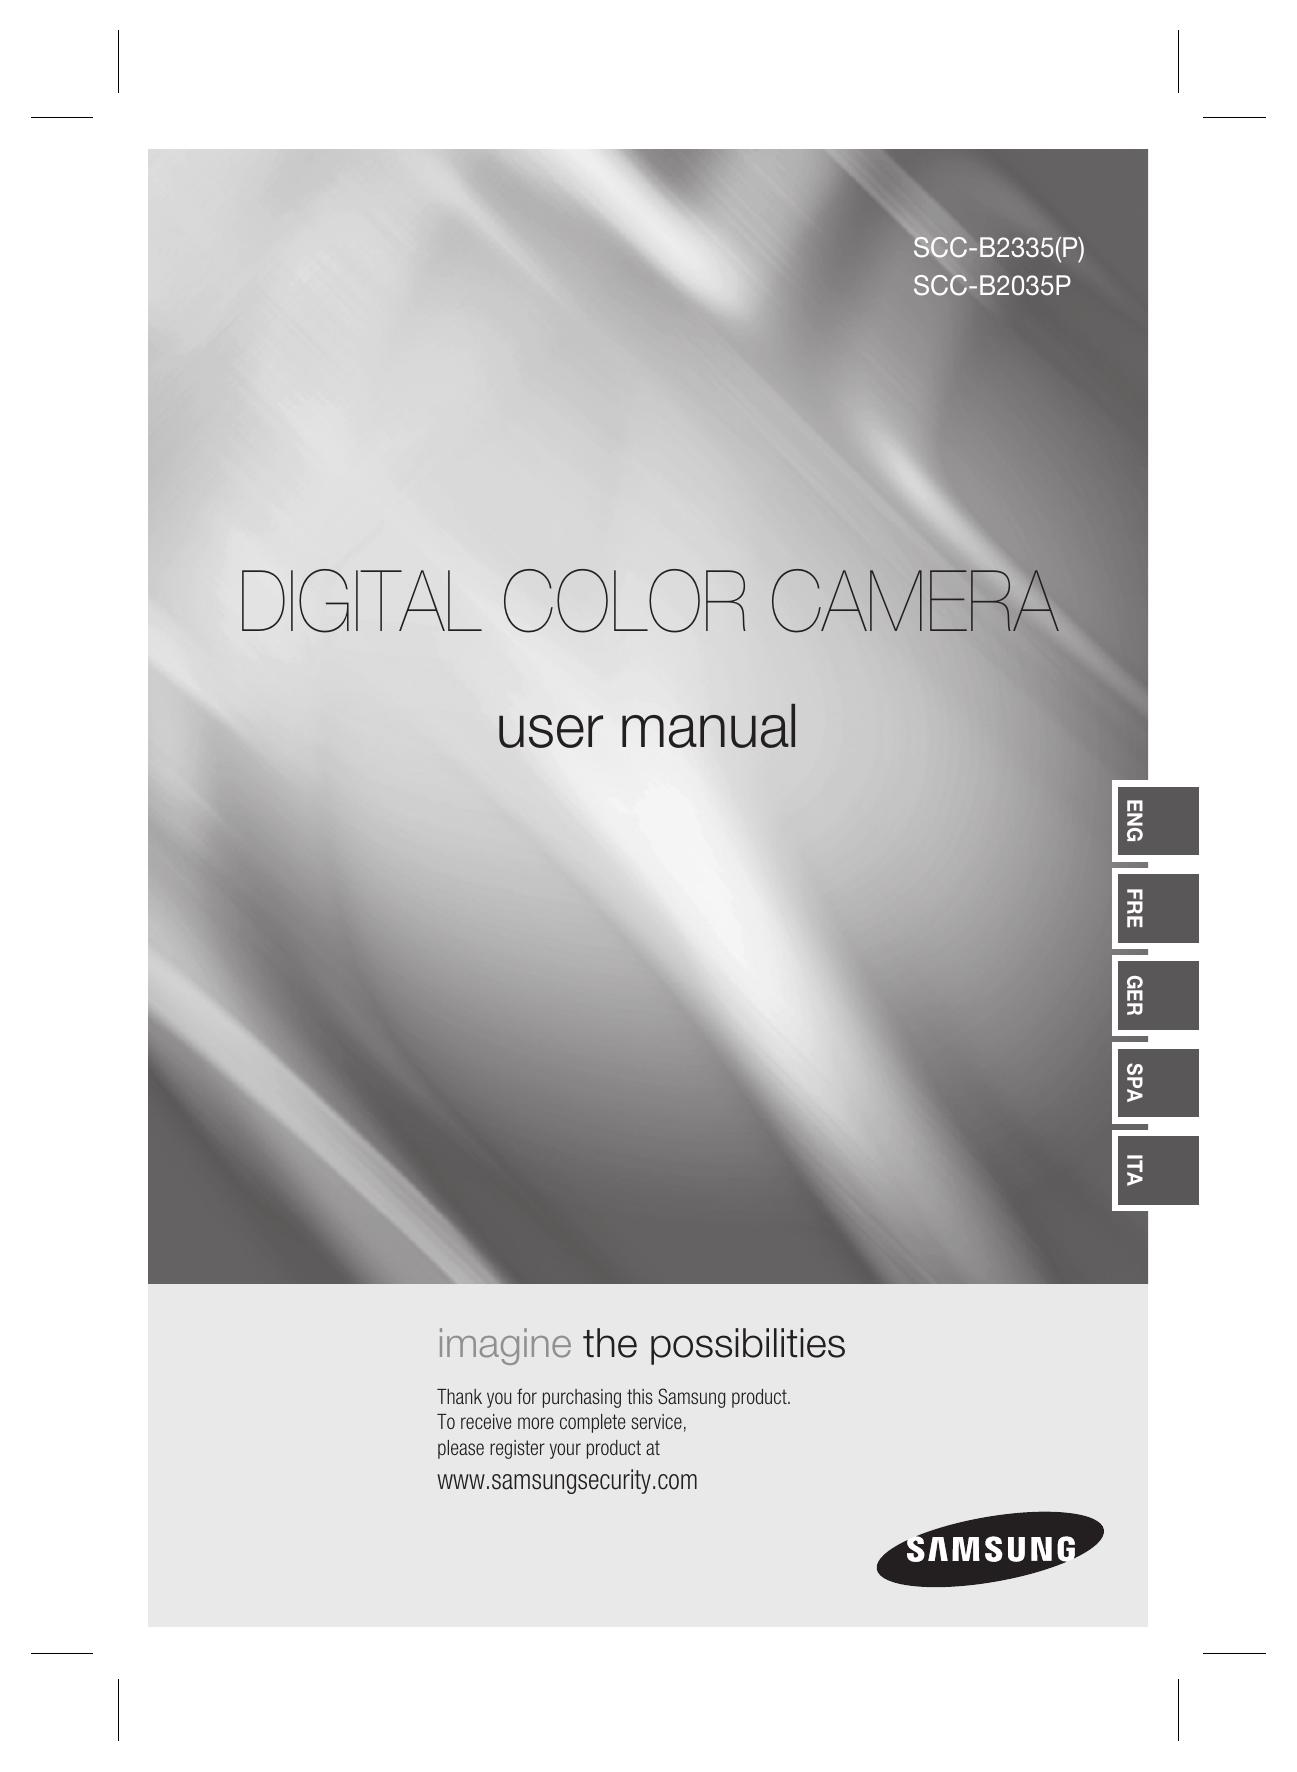 Samsung SCC-B2035P Security Camera User Manual